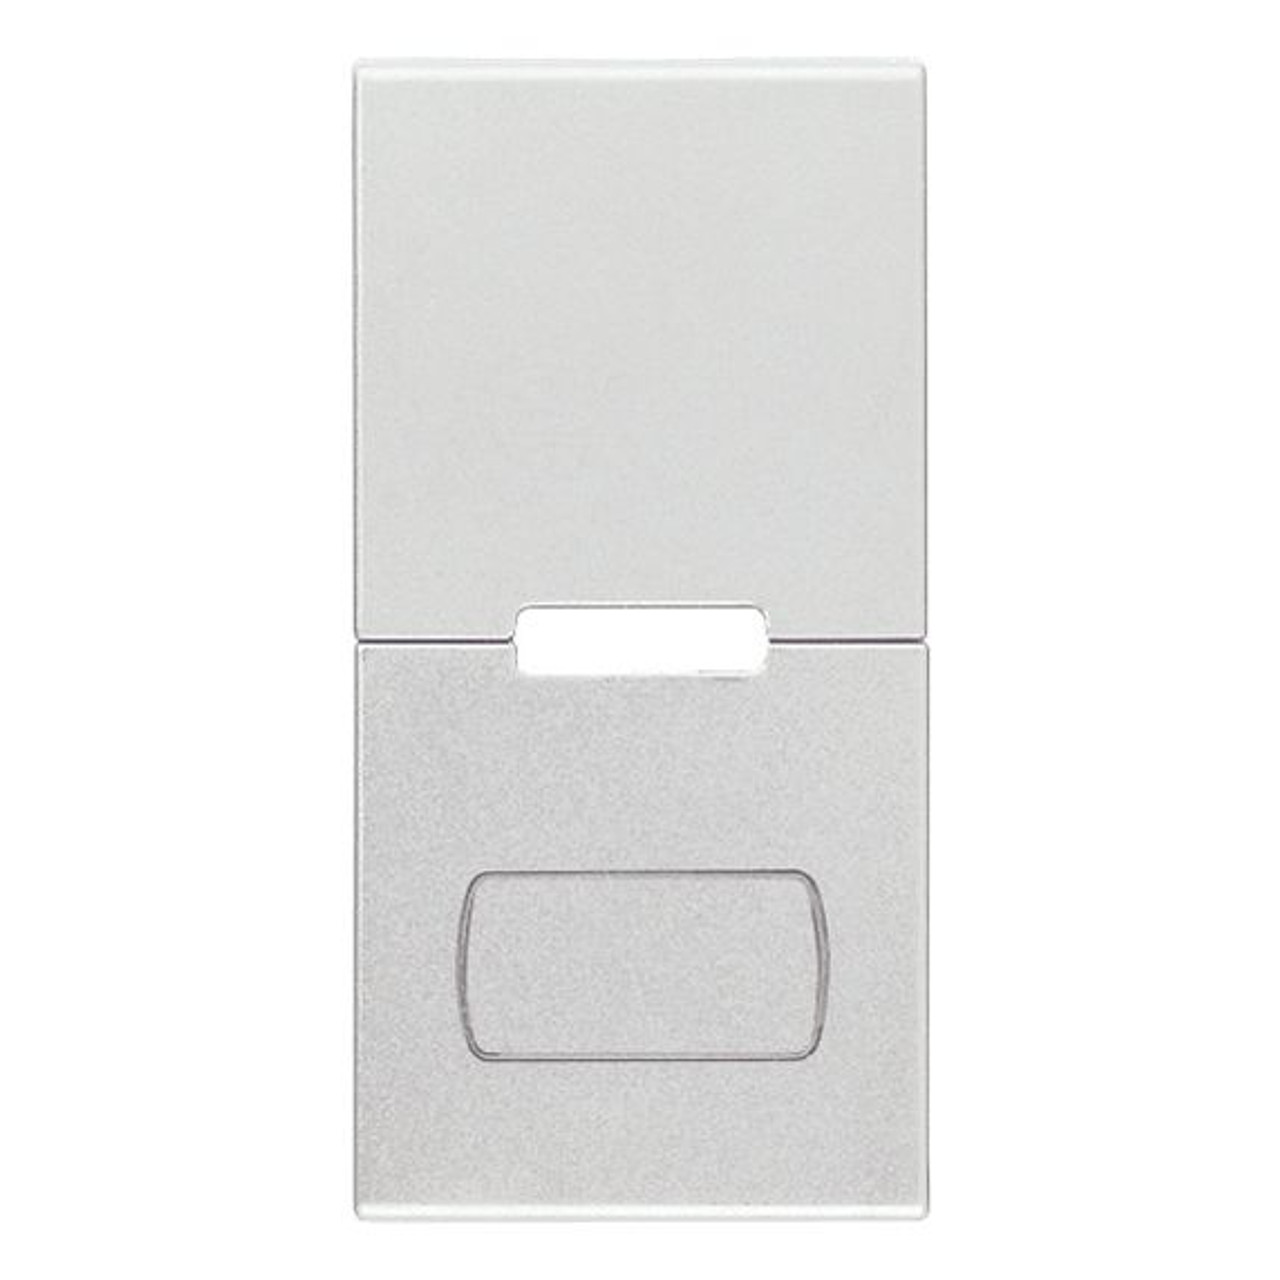 Vimar - Eikon 20531.0 Rocker Button - Interchangeable, 1 Module, Customizable Symbol, Plastic - Apollo Lighting